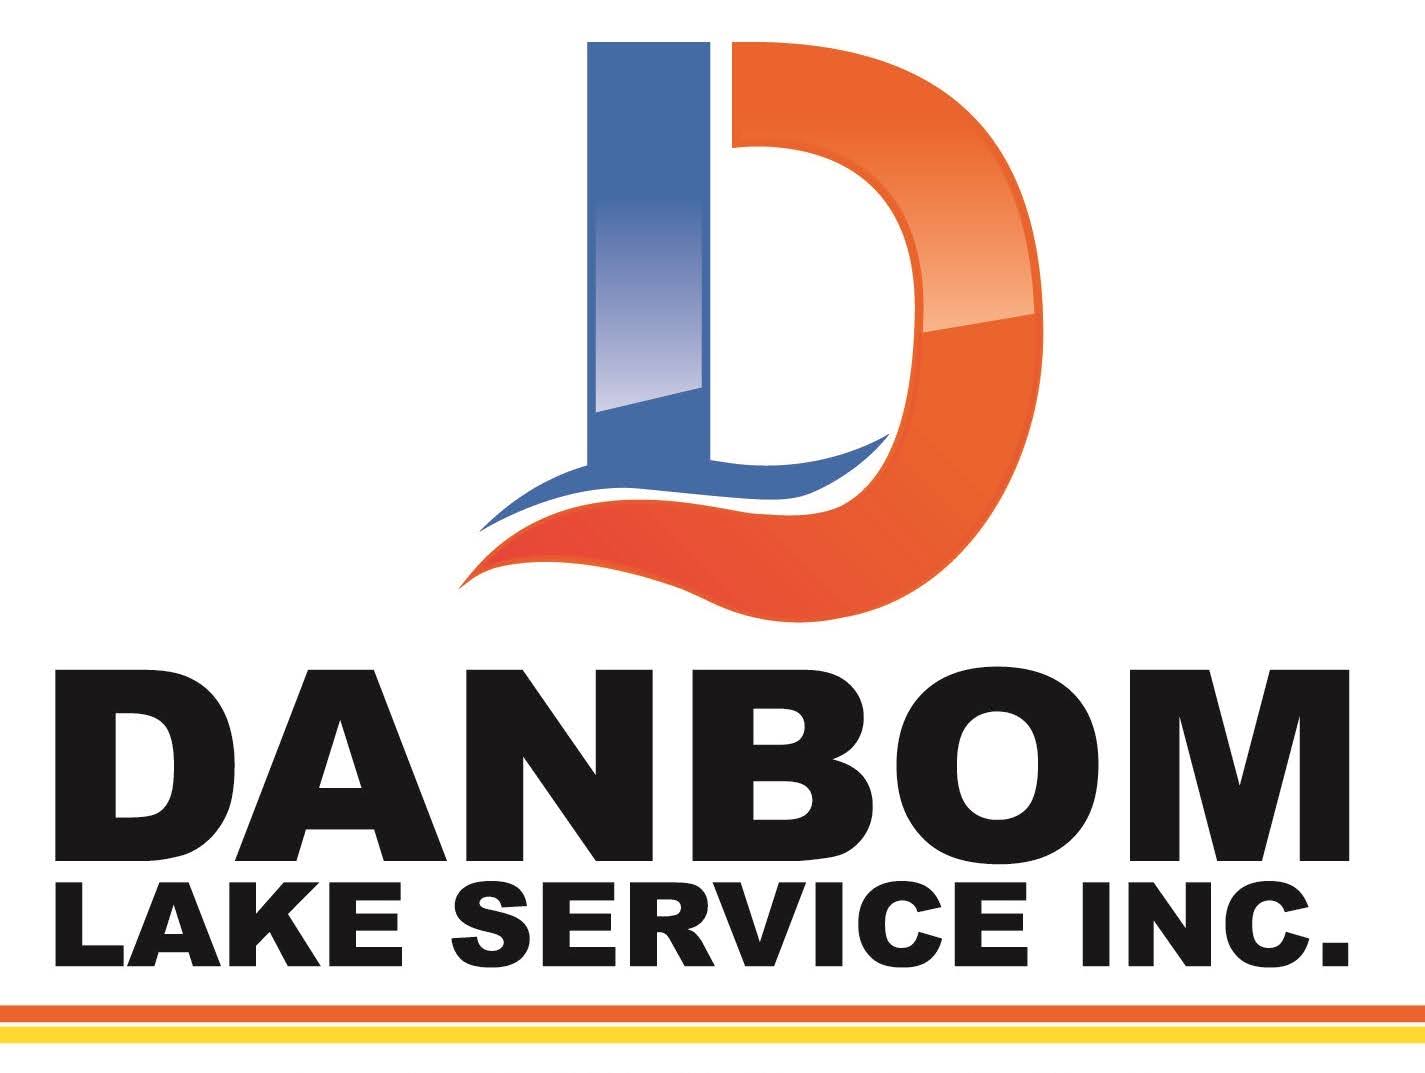 Danbom Lake Service